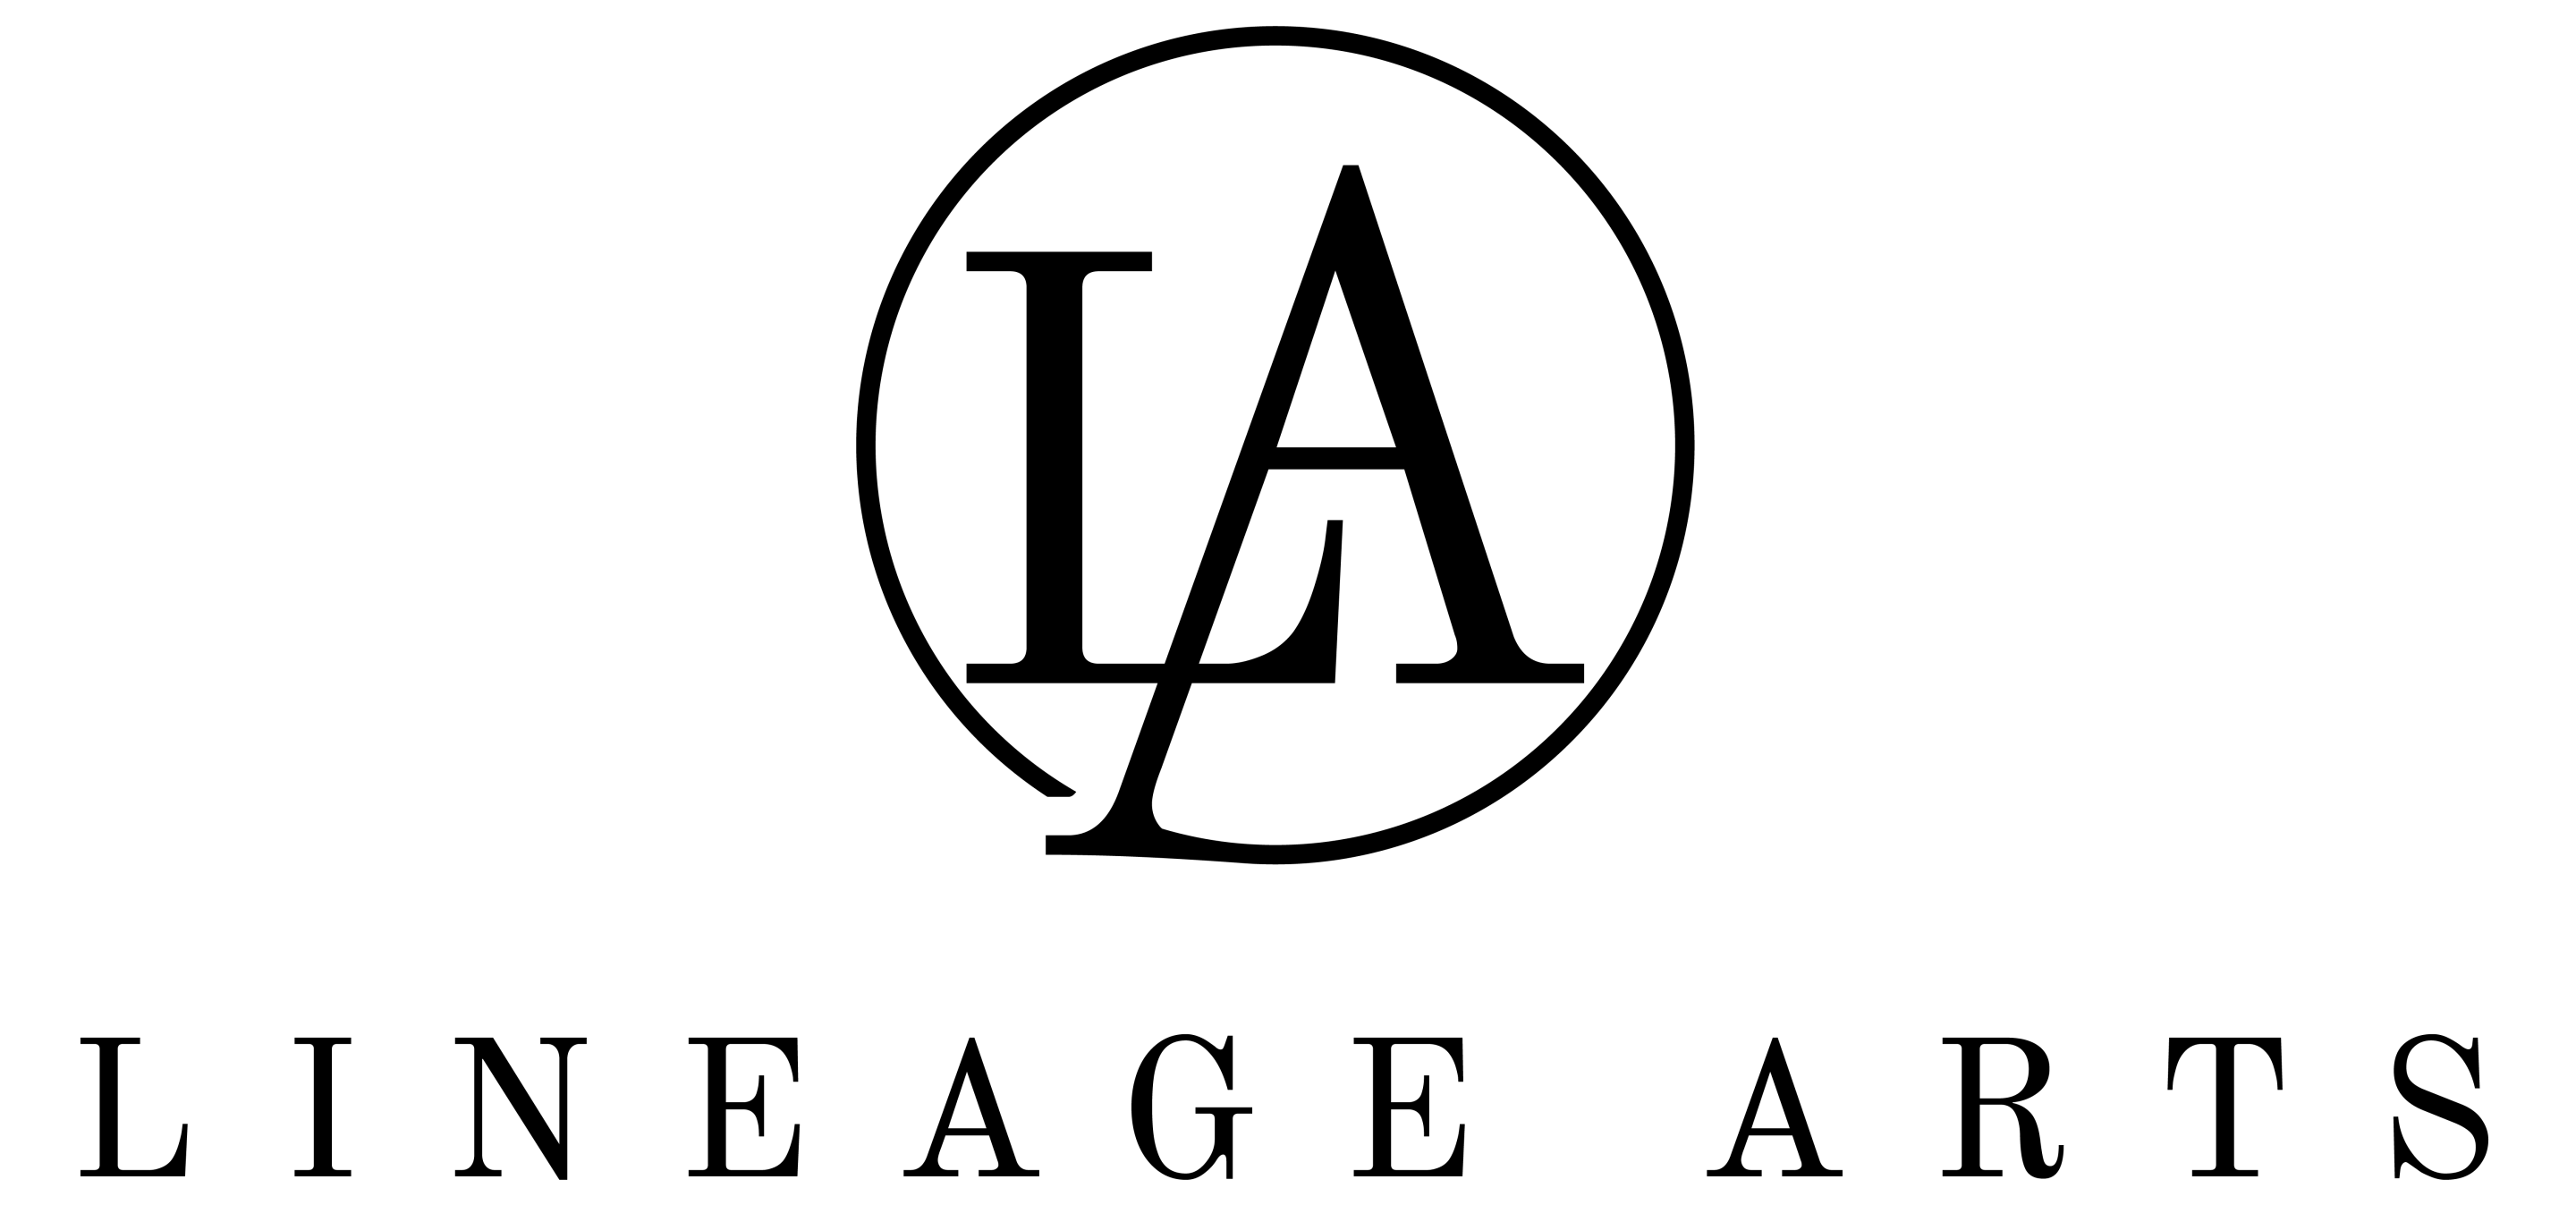 Lineage art museum logo ottawa